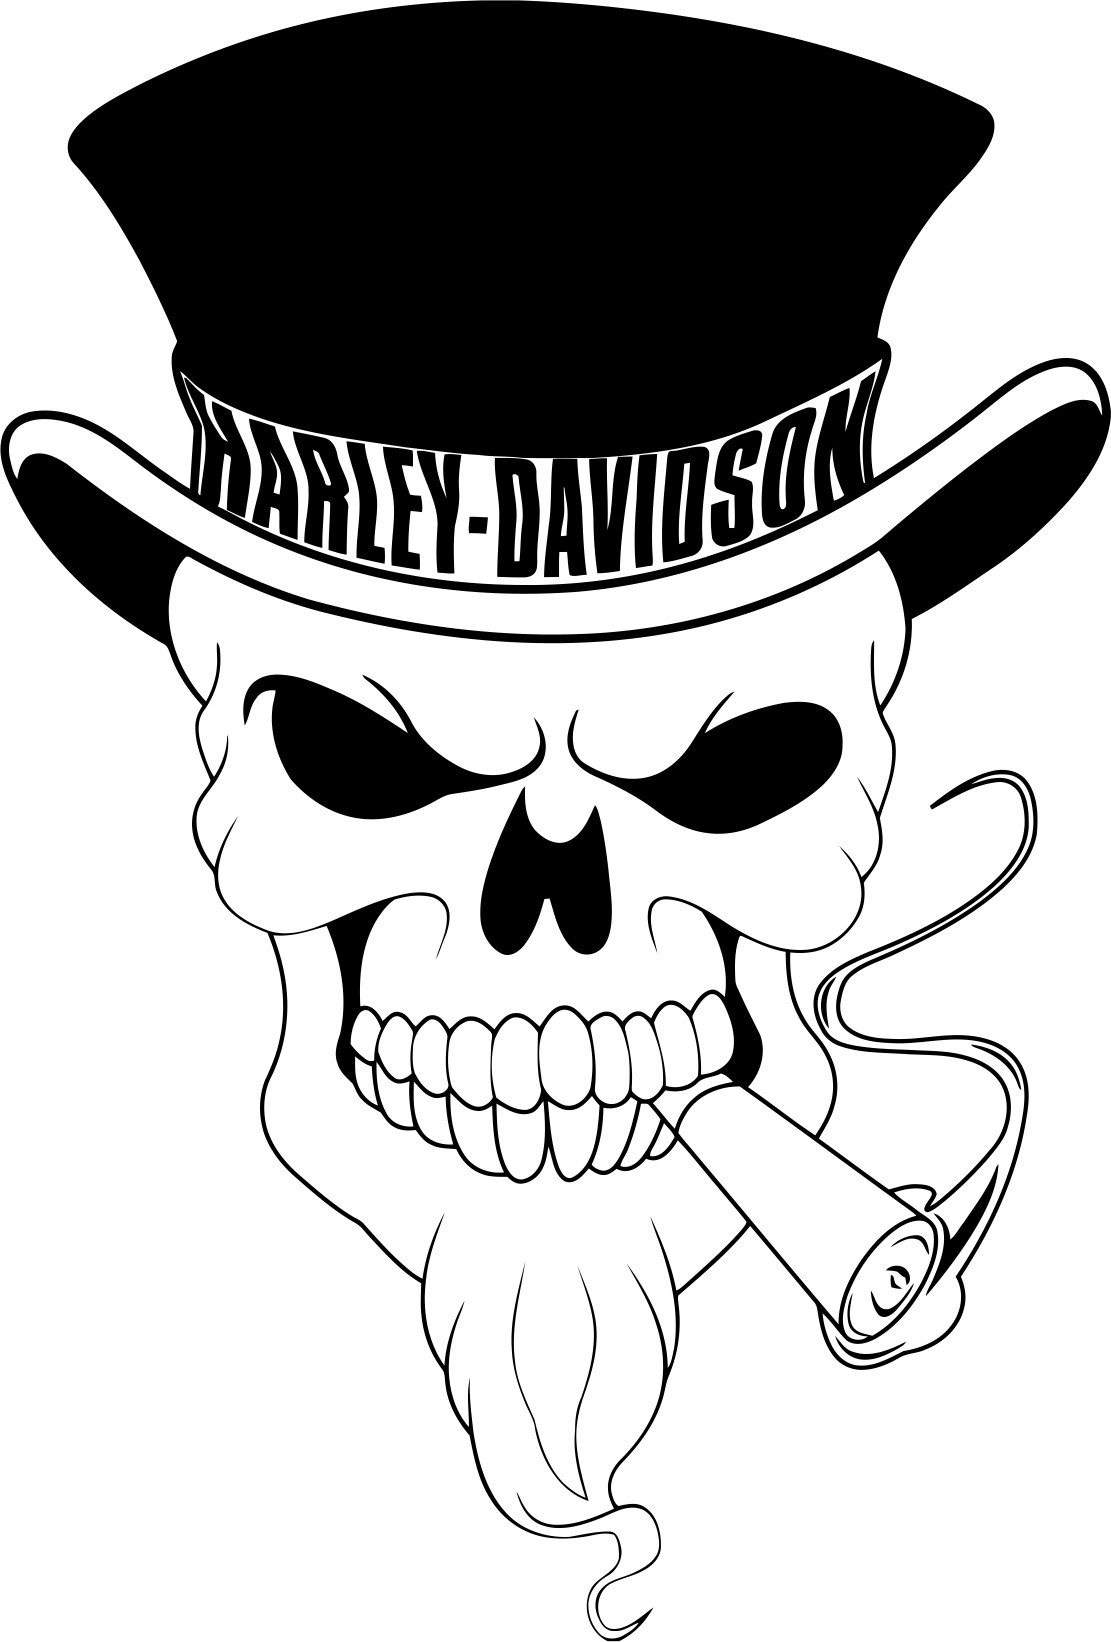 Harley Davidson Skull Vector Laser Cut CDR File